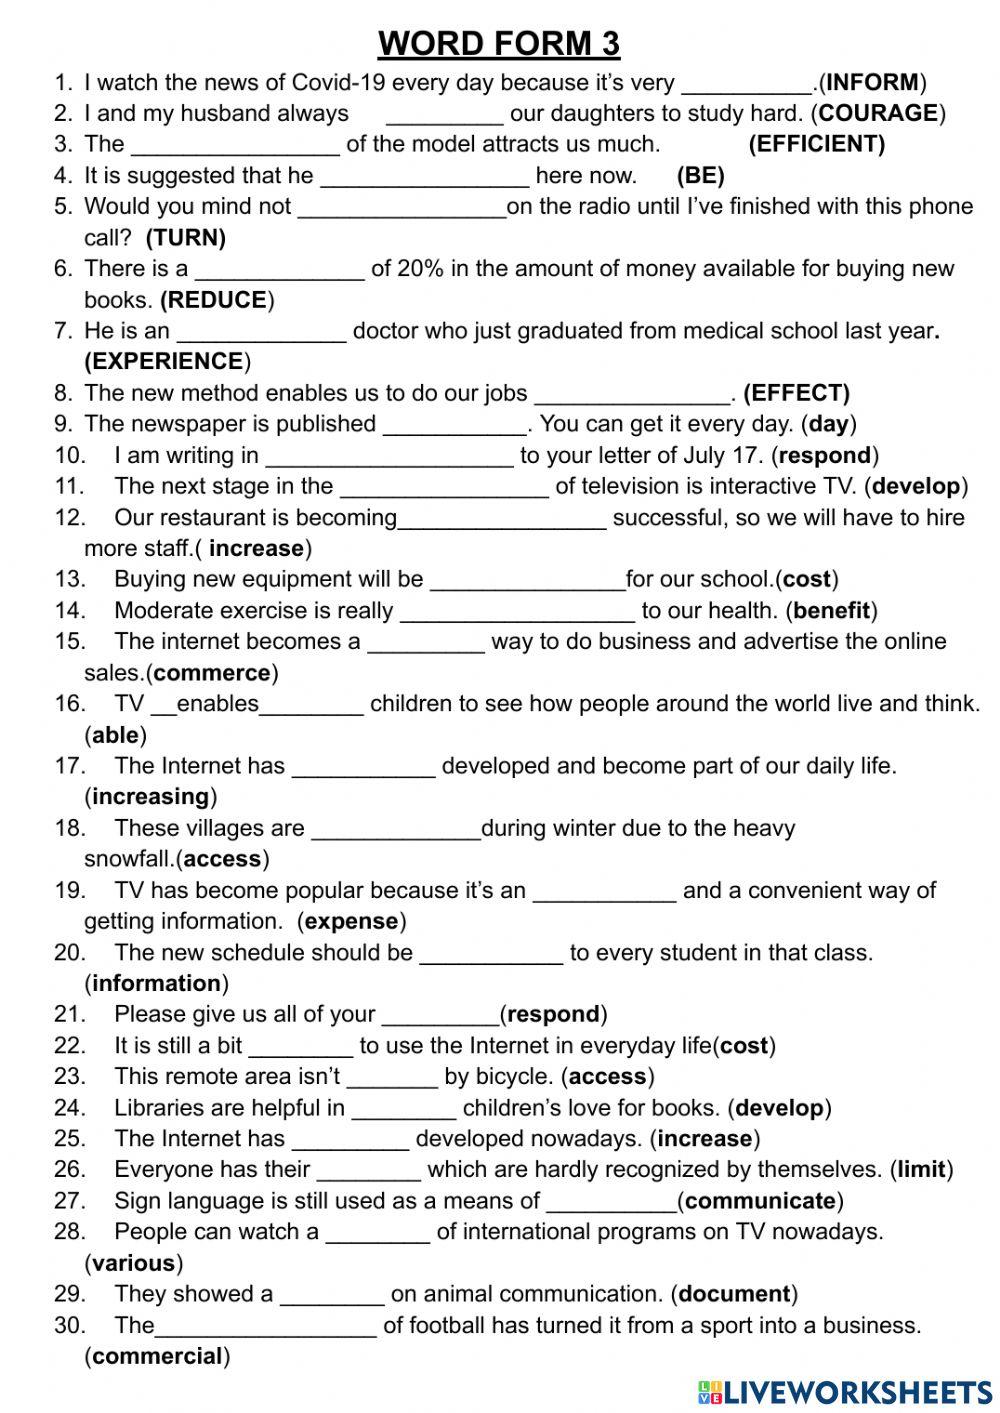 Grade 9 - word form 3